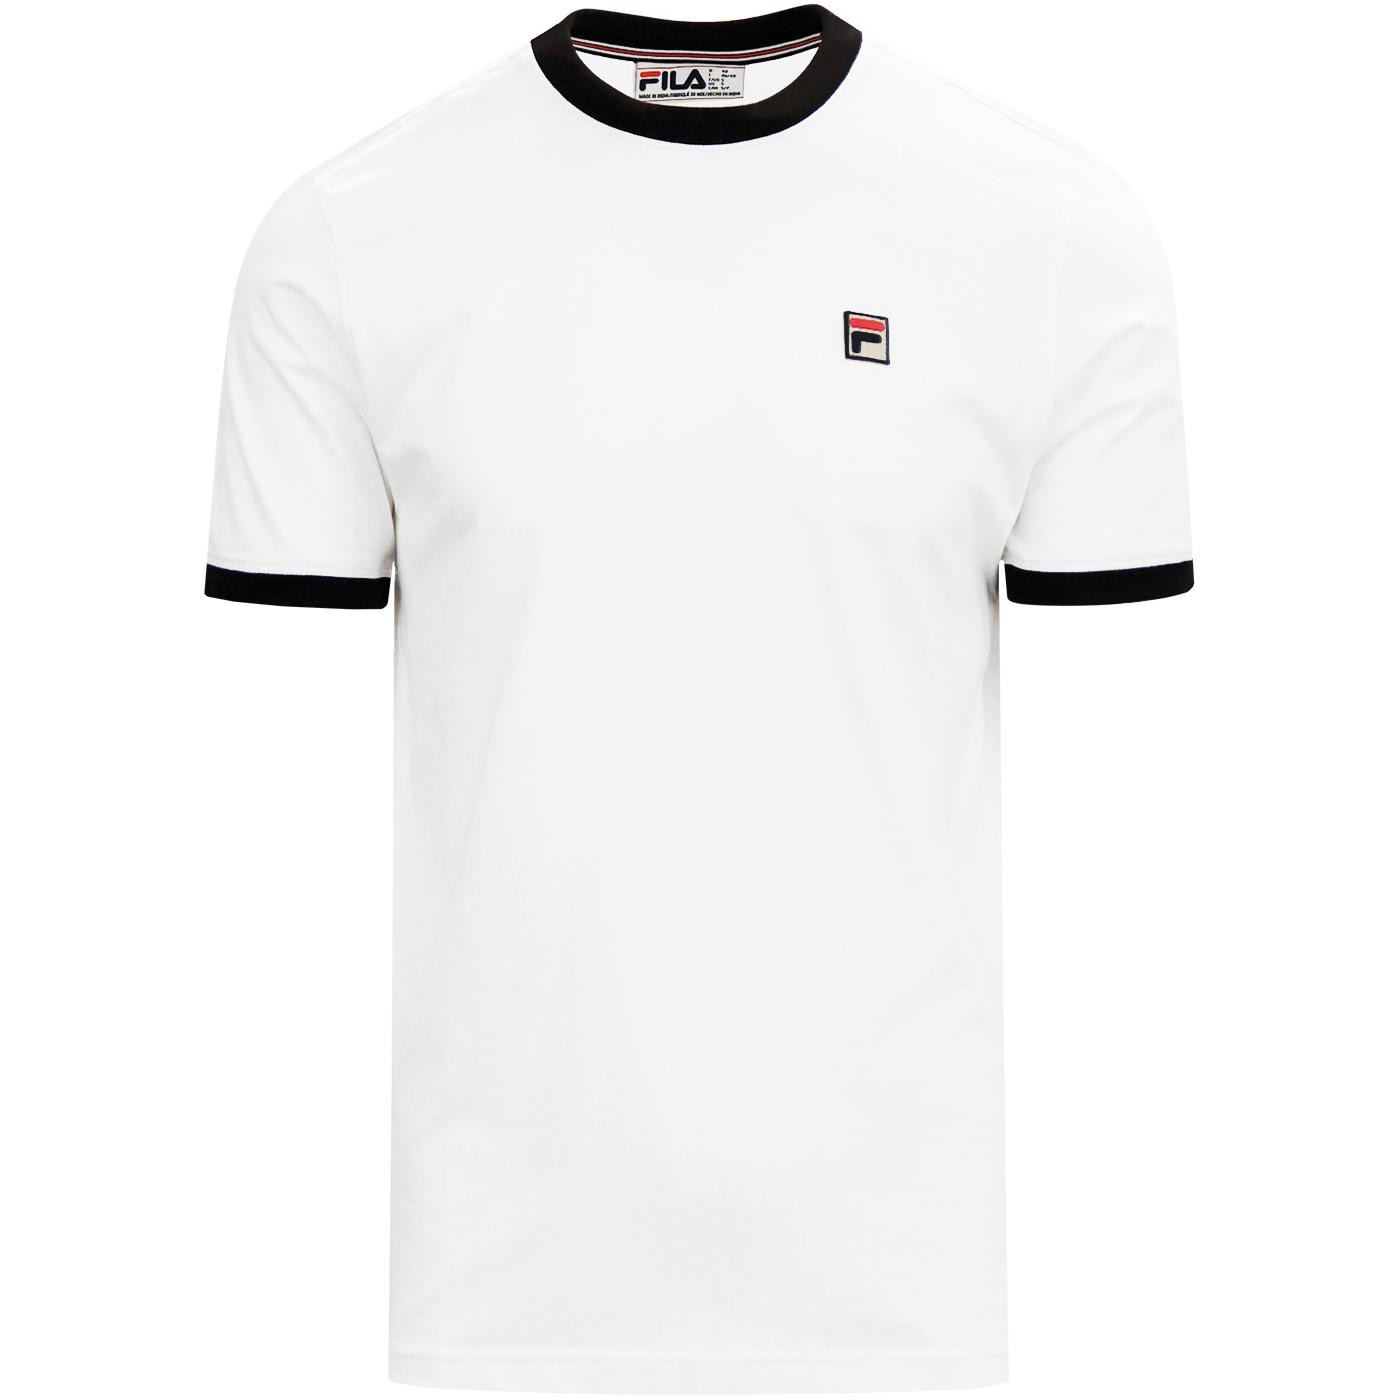 FILA VINTAGE Marconi Retro 70s Ringer T-shirt in White/Black